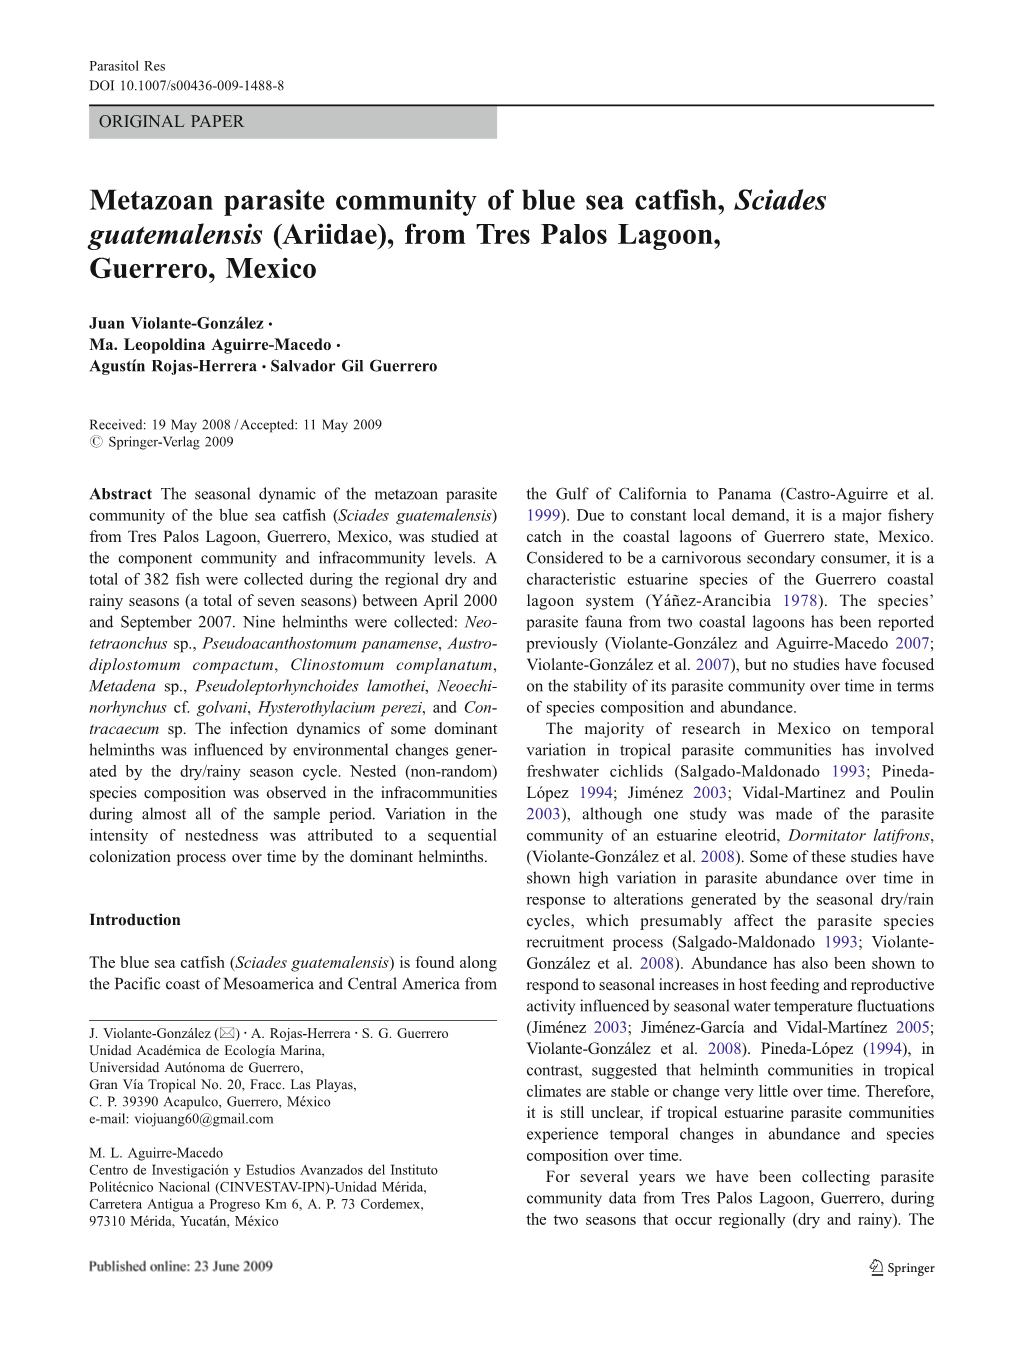 Metazoan Parasite Community of Blue Sea Catfish, Sciades Guatemalensis (Ariidae), from Tres Palos Lagoon, Guerrero, Mexico